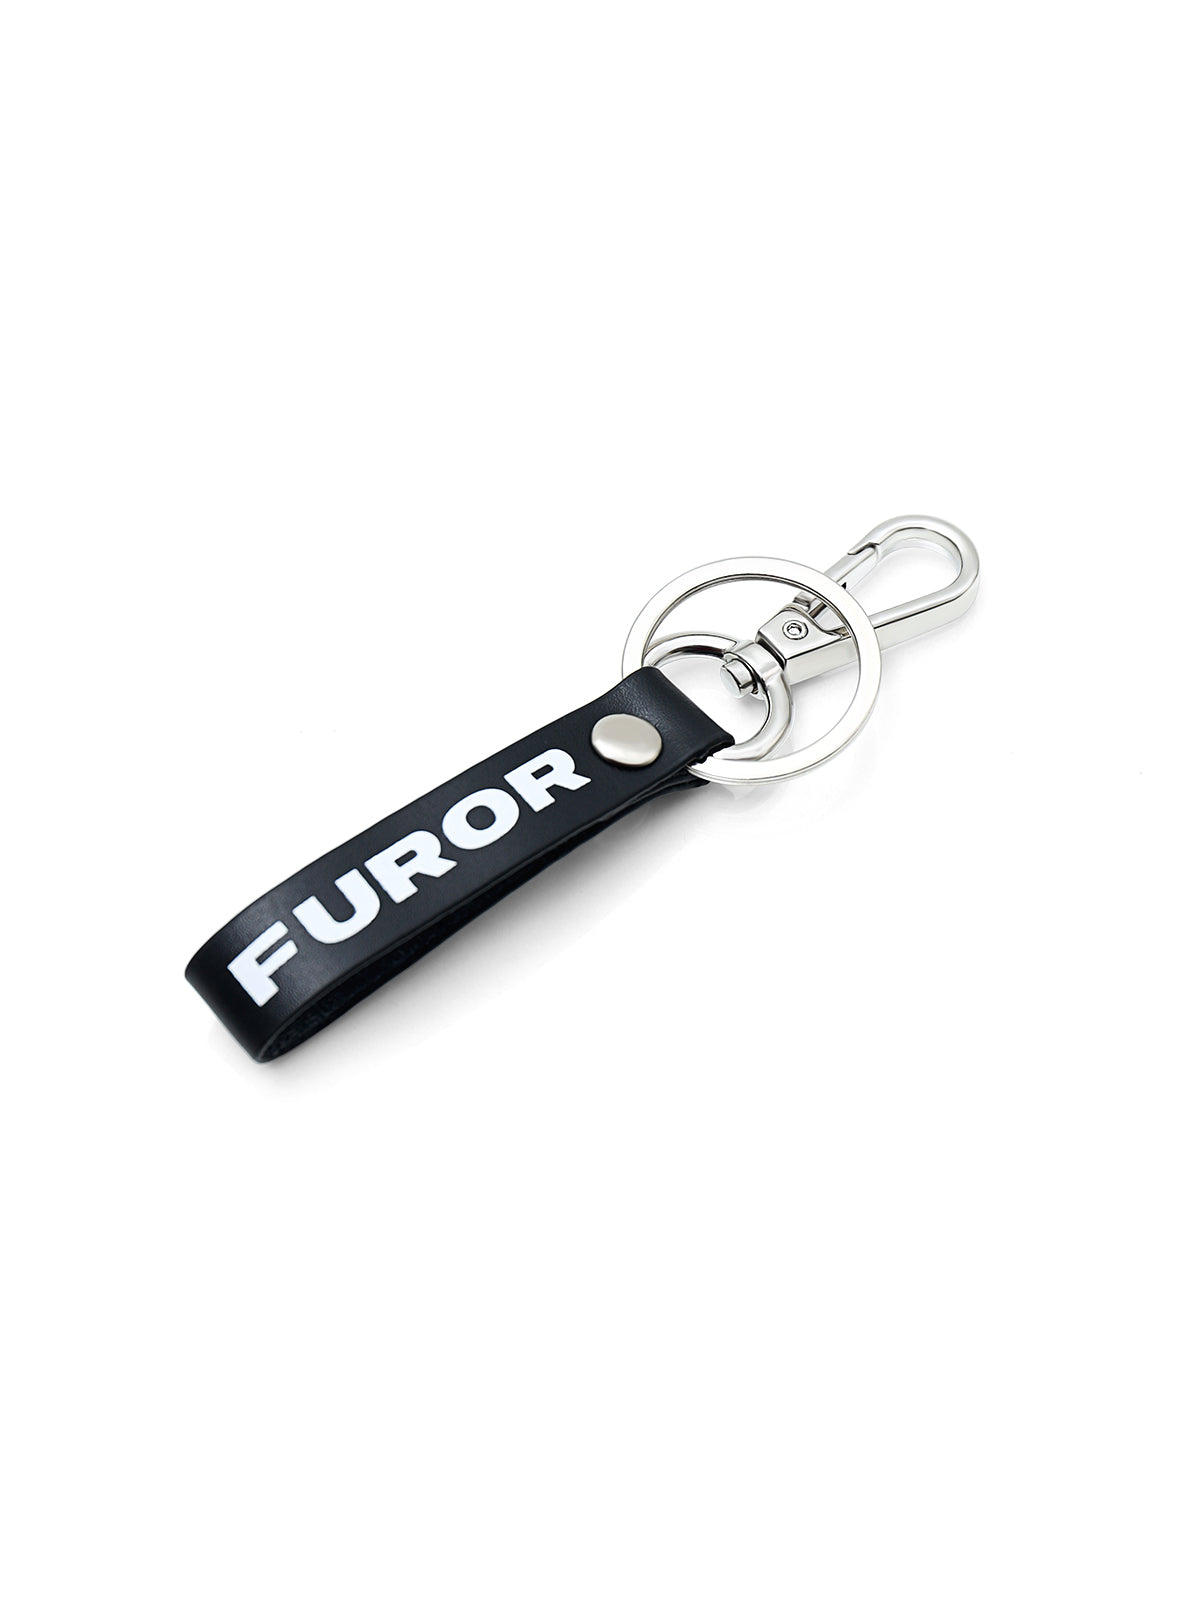 Black & White Leather Keychain - FAKC24-003